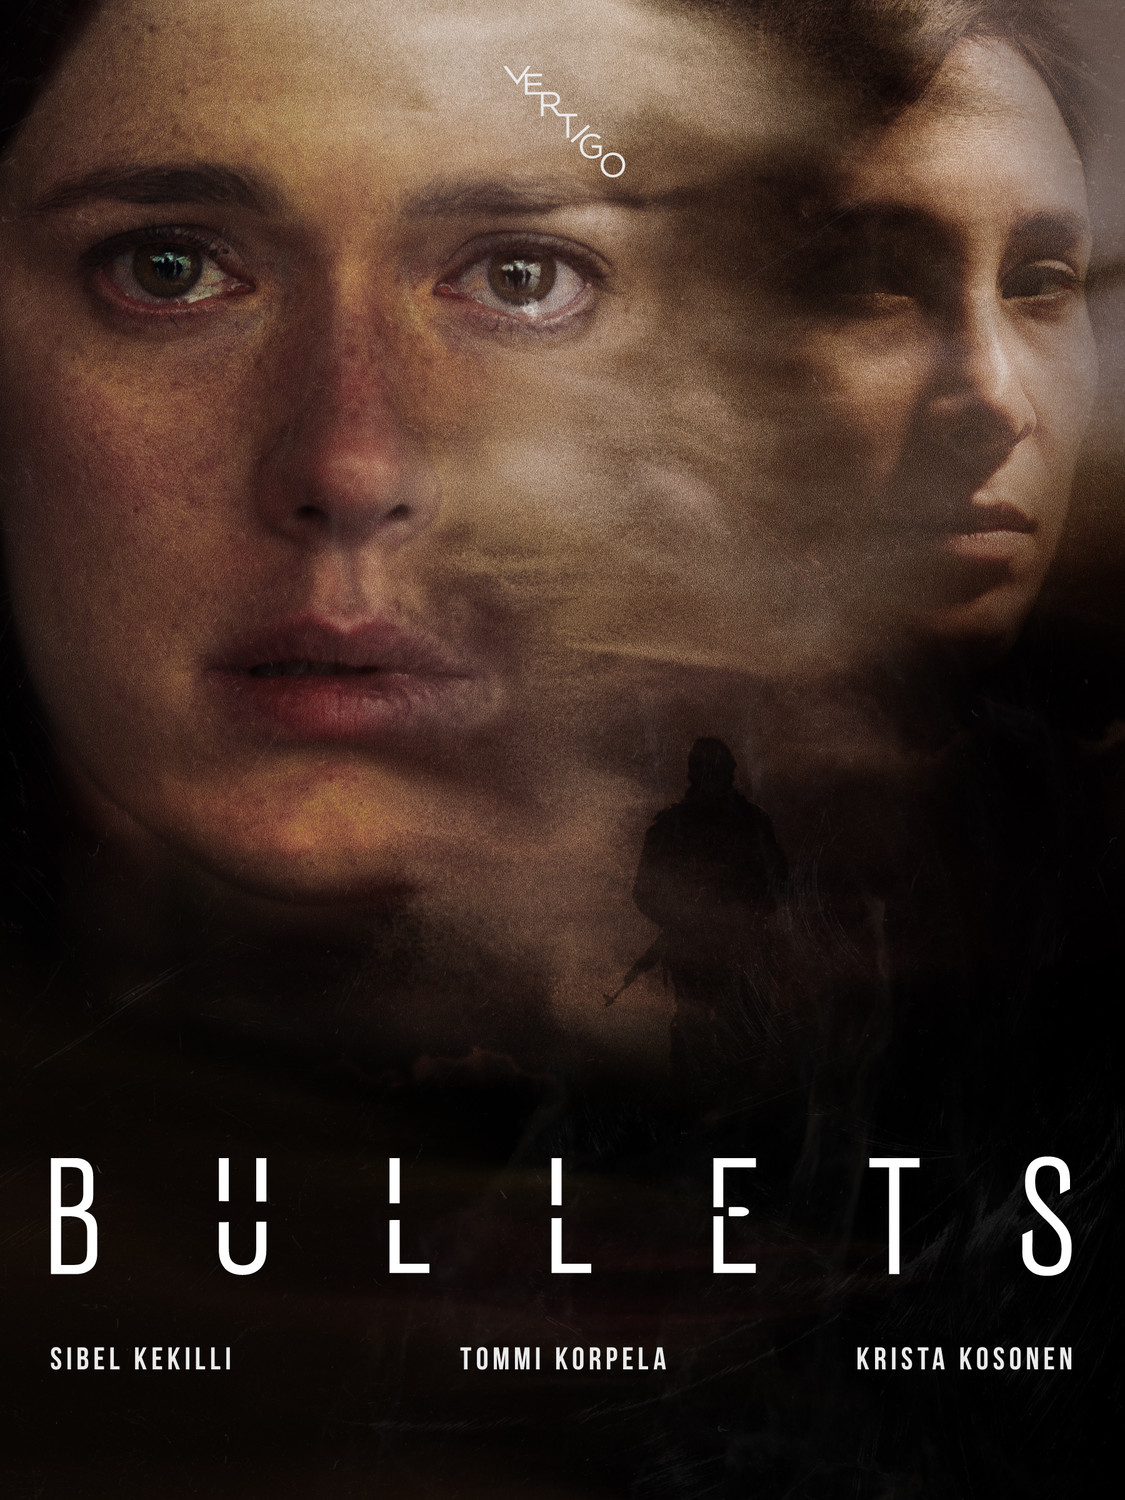 Bullets (2018)